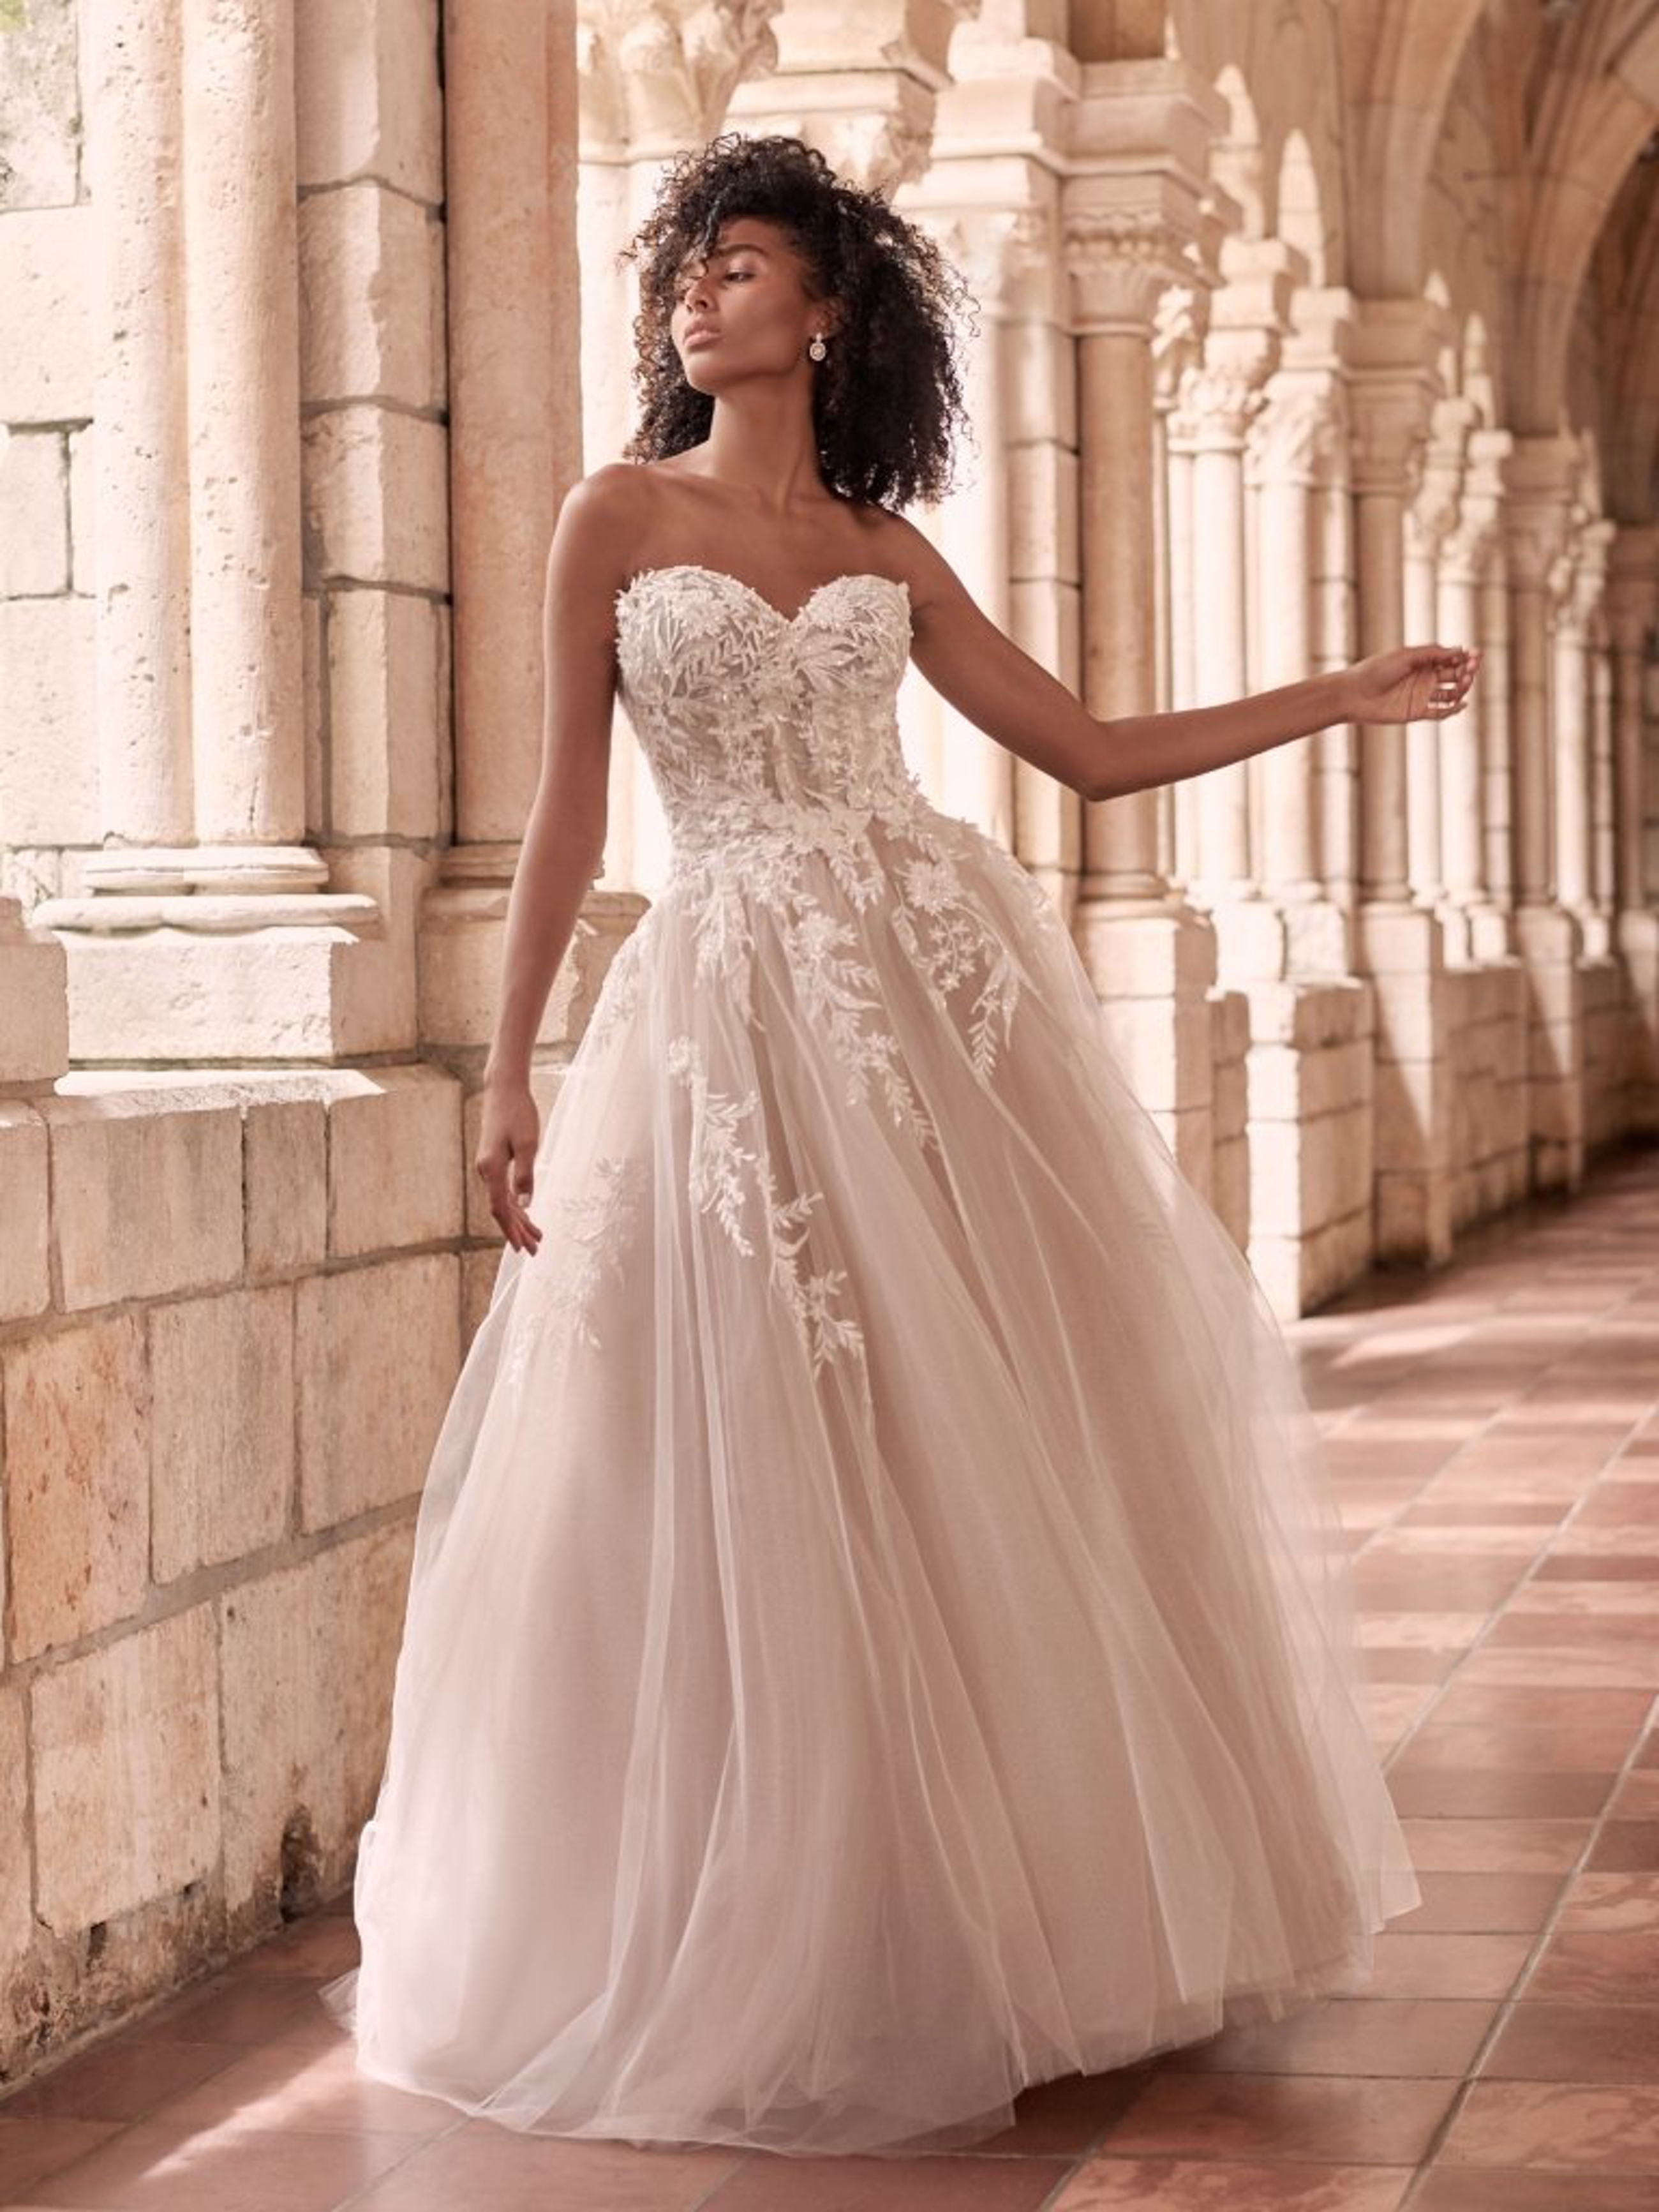 Fantasy Wedding Dresses · Prom Fantasy · Online Store Powered by Storenvy